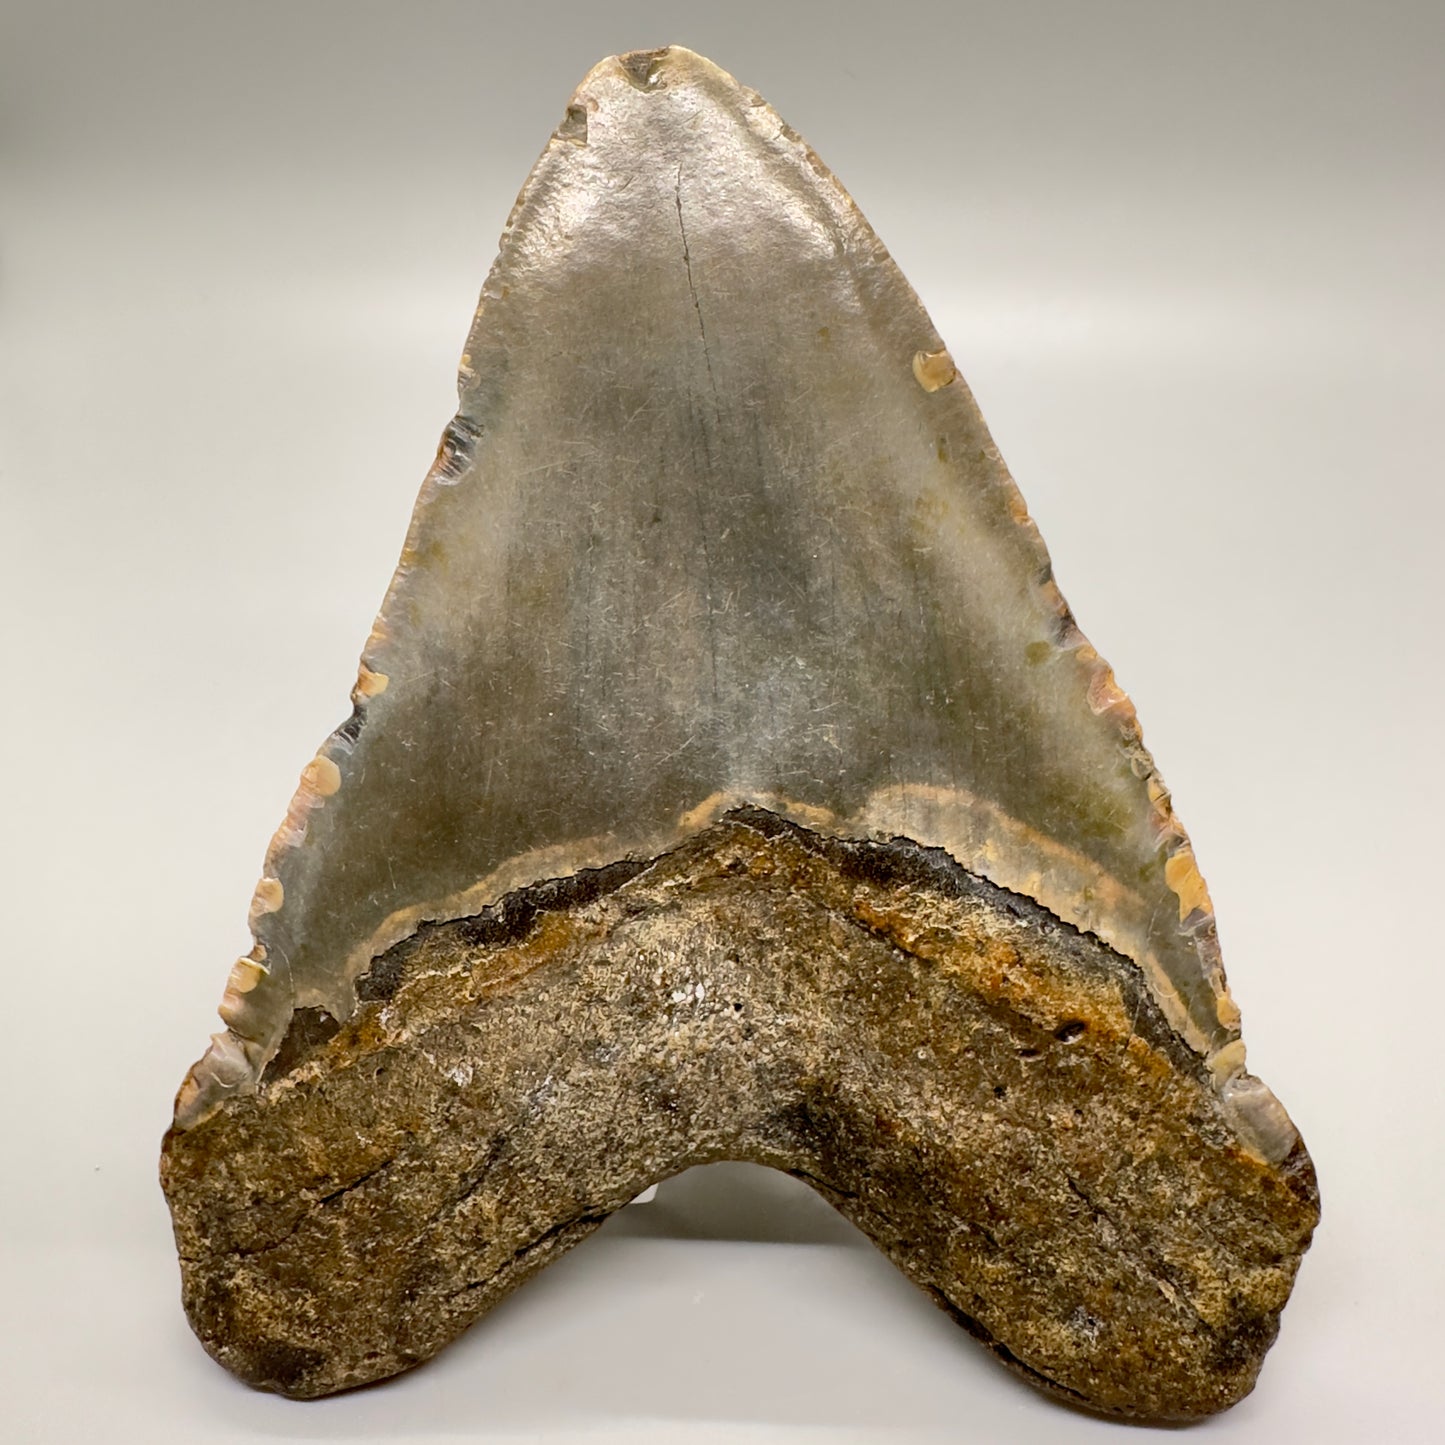 Blue and orange 5.61" Fossil Megalodon Tooth - North Carolina CM4599 - Back